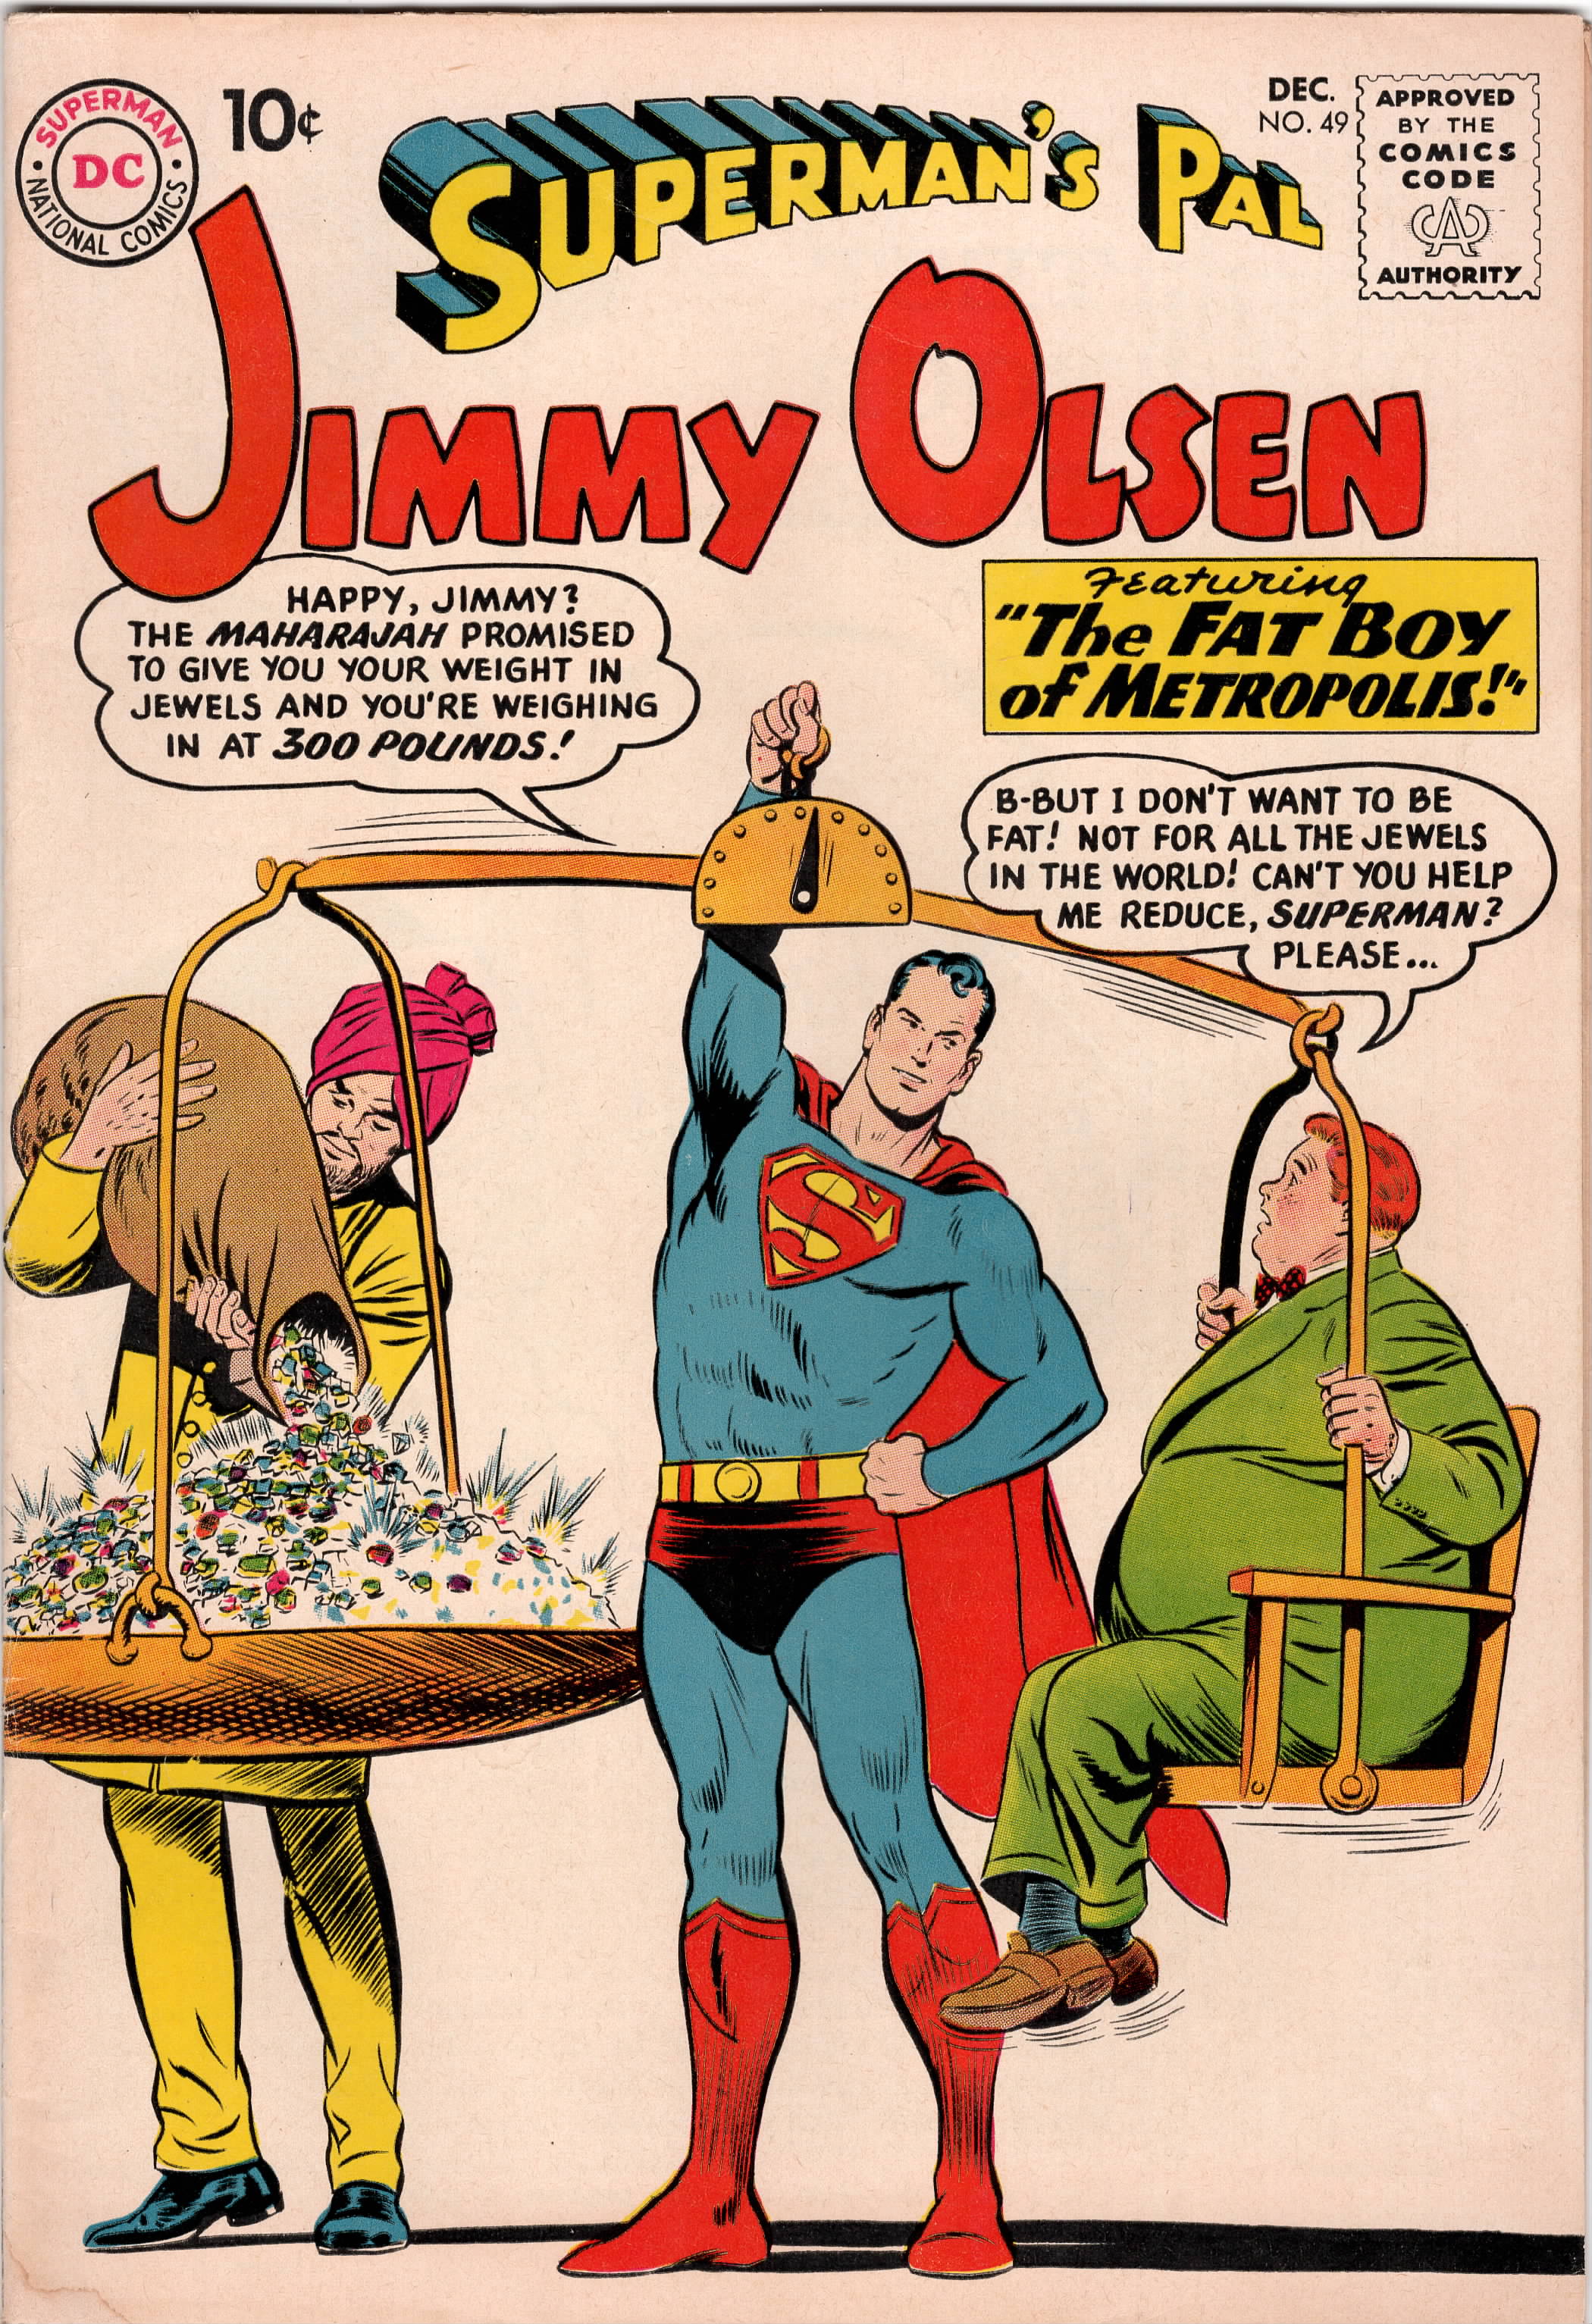 Superman's Pal Jimmy Olsen #049